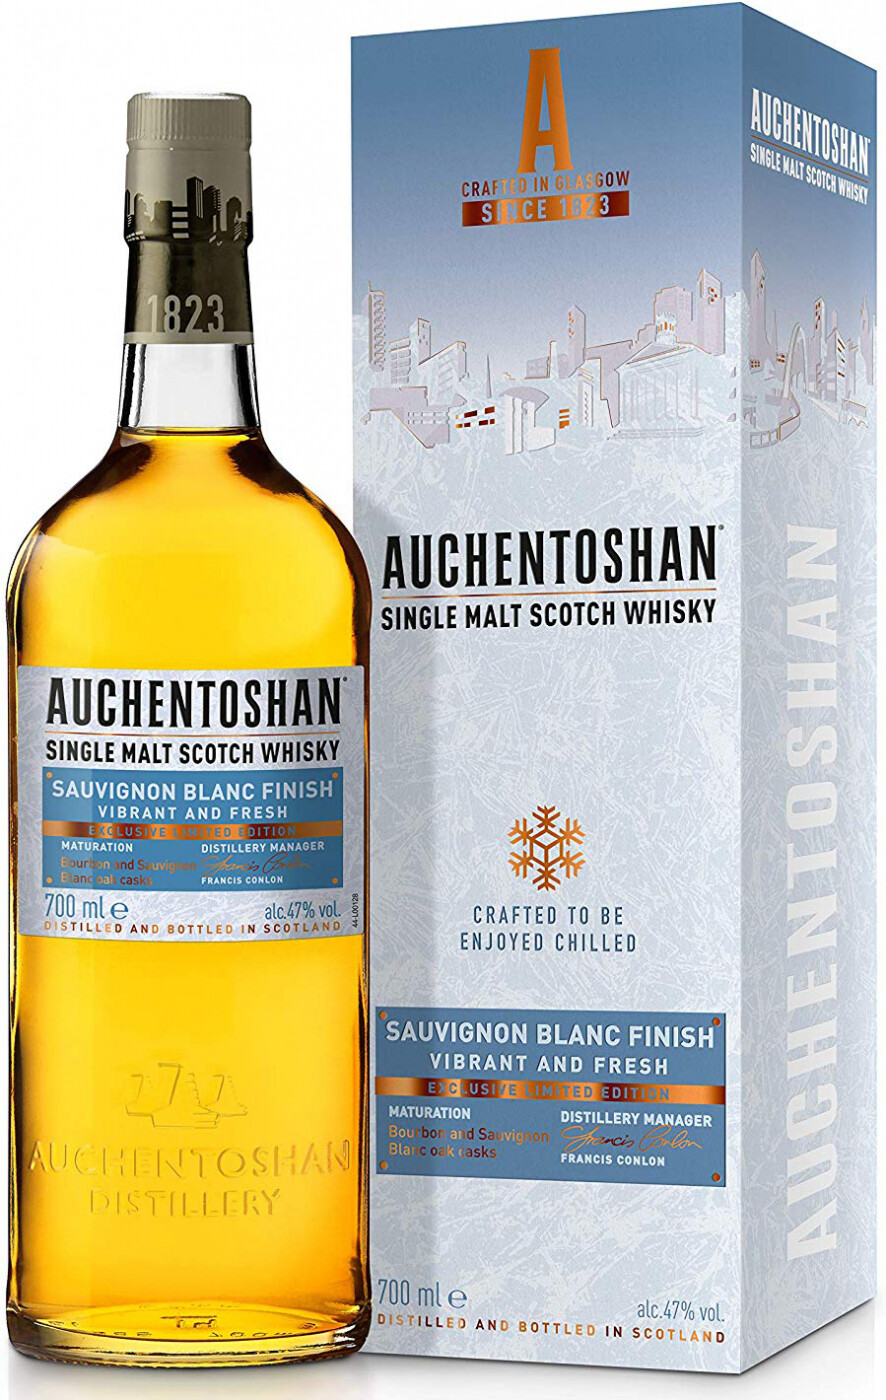 Auchentoshan, Sauvignon Blanc Finish, gift box | Акентошан, Совиньон Блан Финиш, в подарочной коробке